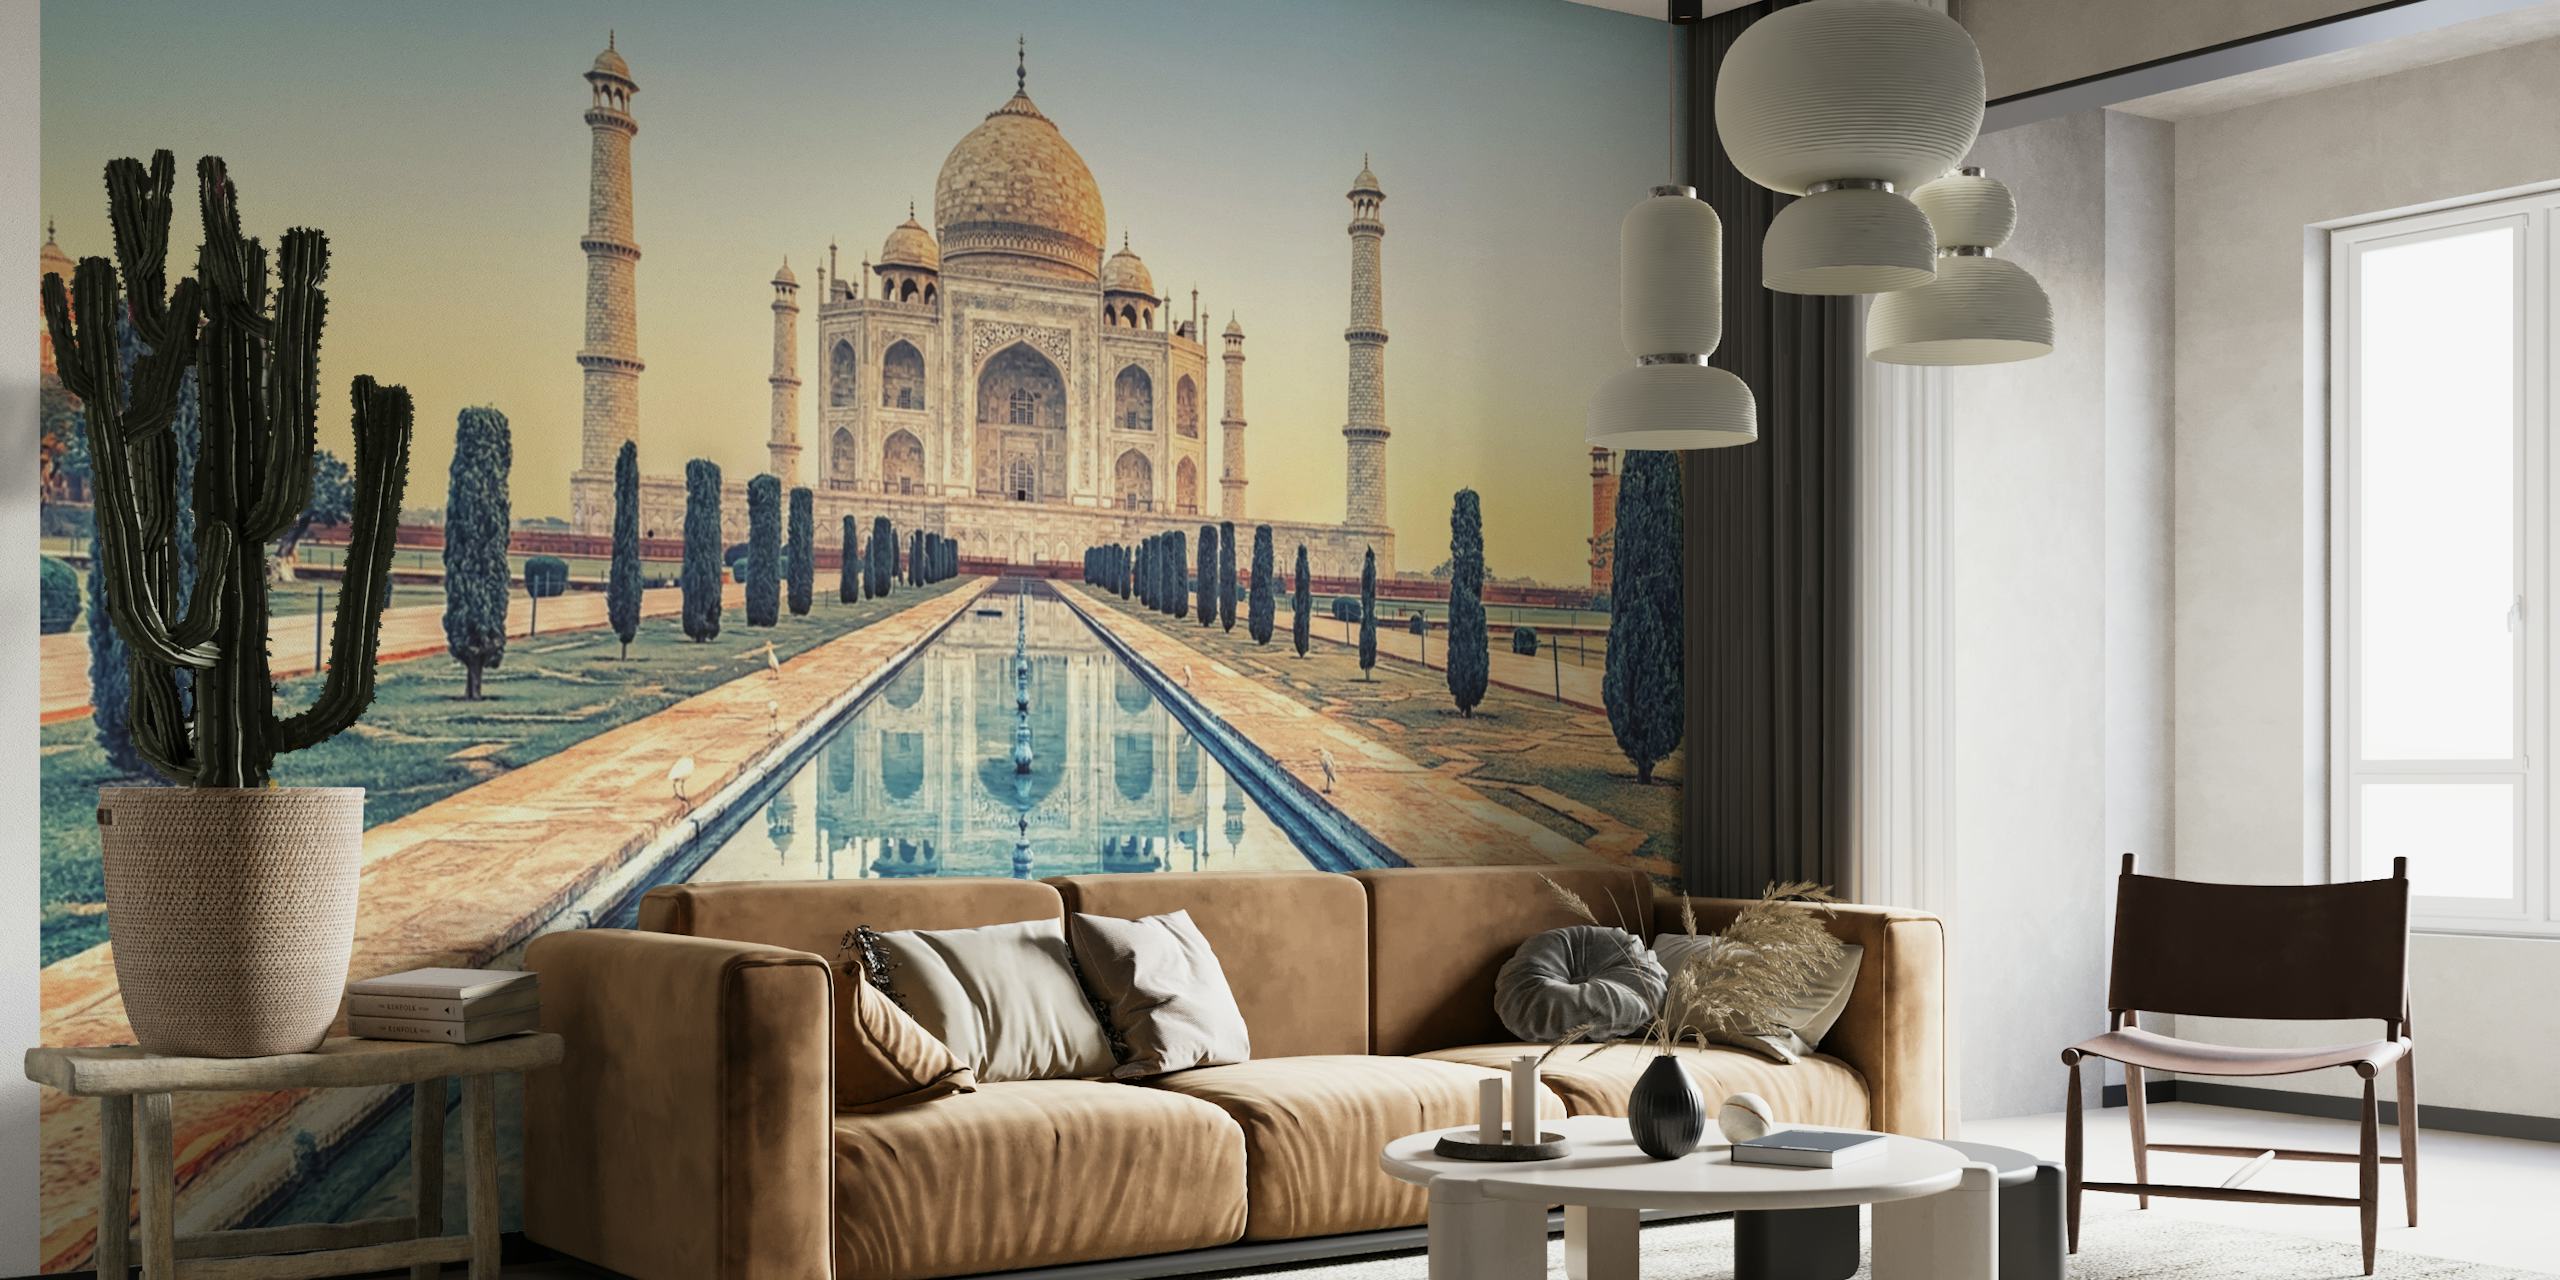 Taj Mahal Mausoleum papel pintado